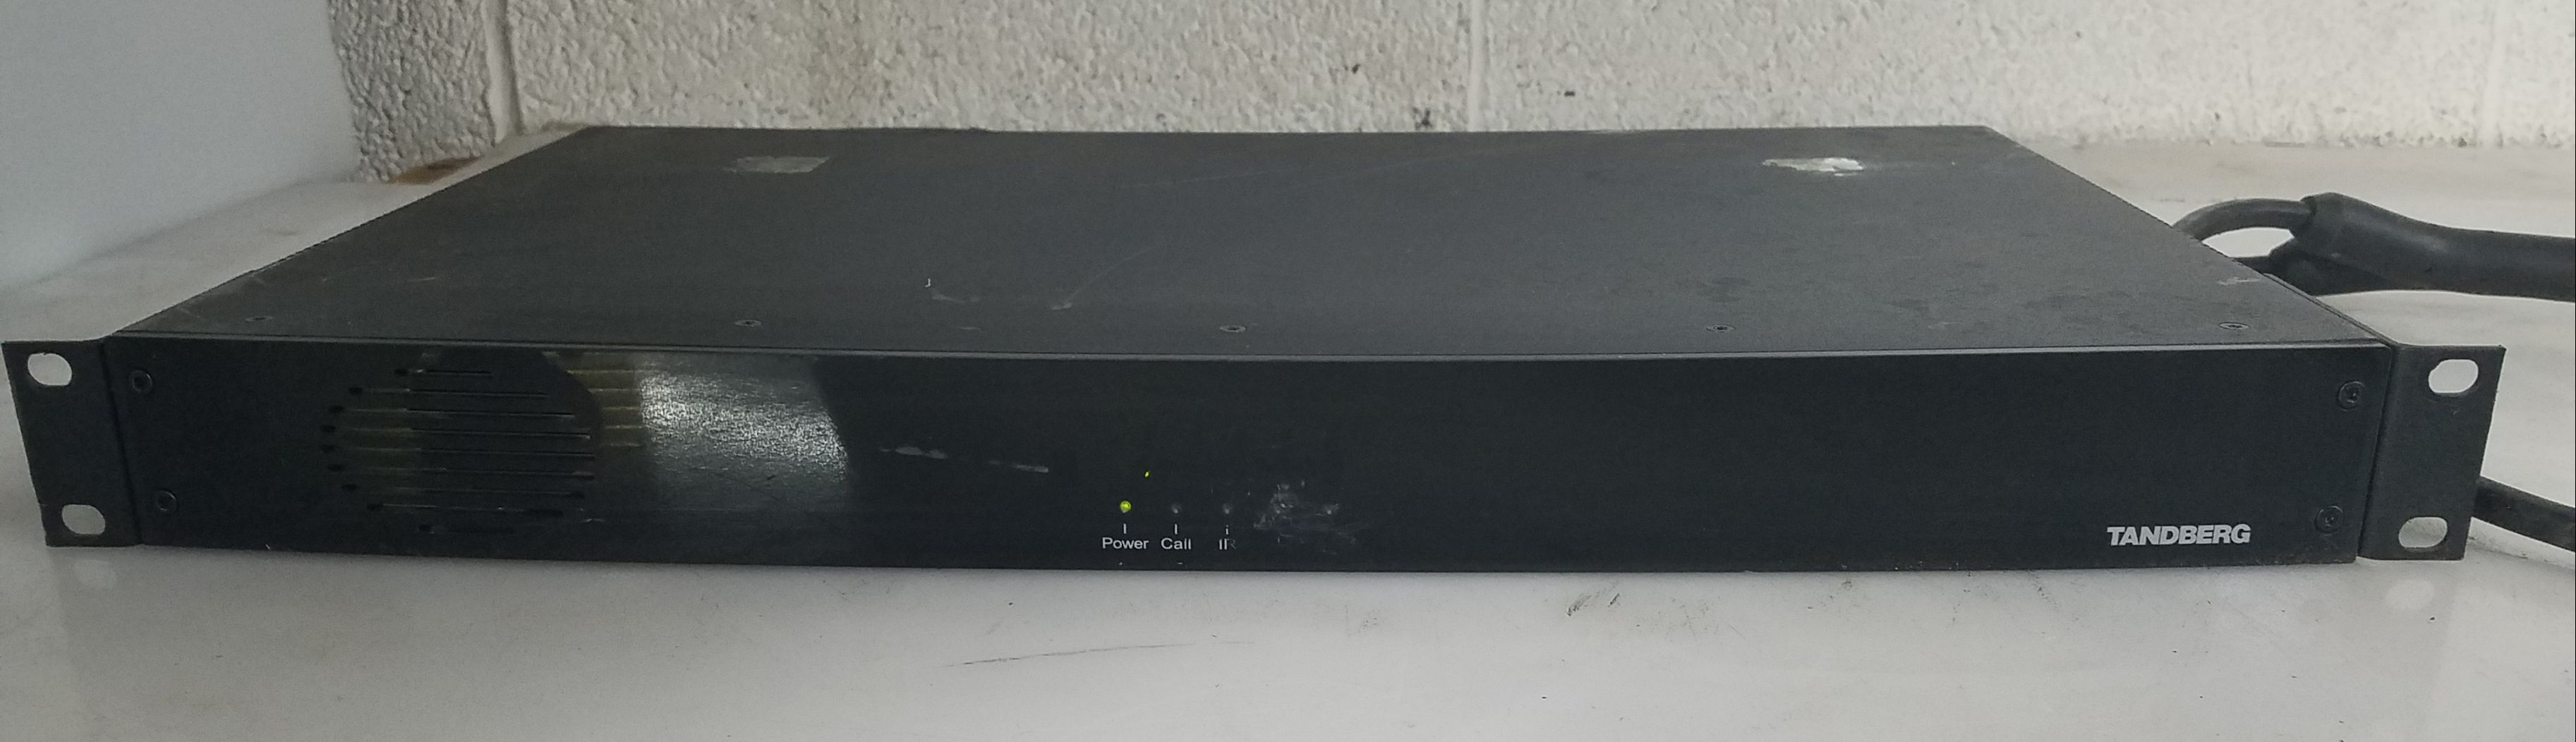 Tandberg Ttc6-08 Video Conference System Unit Receiver T43724 for sale online 